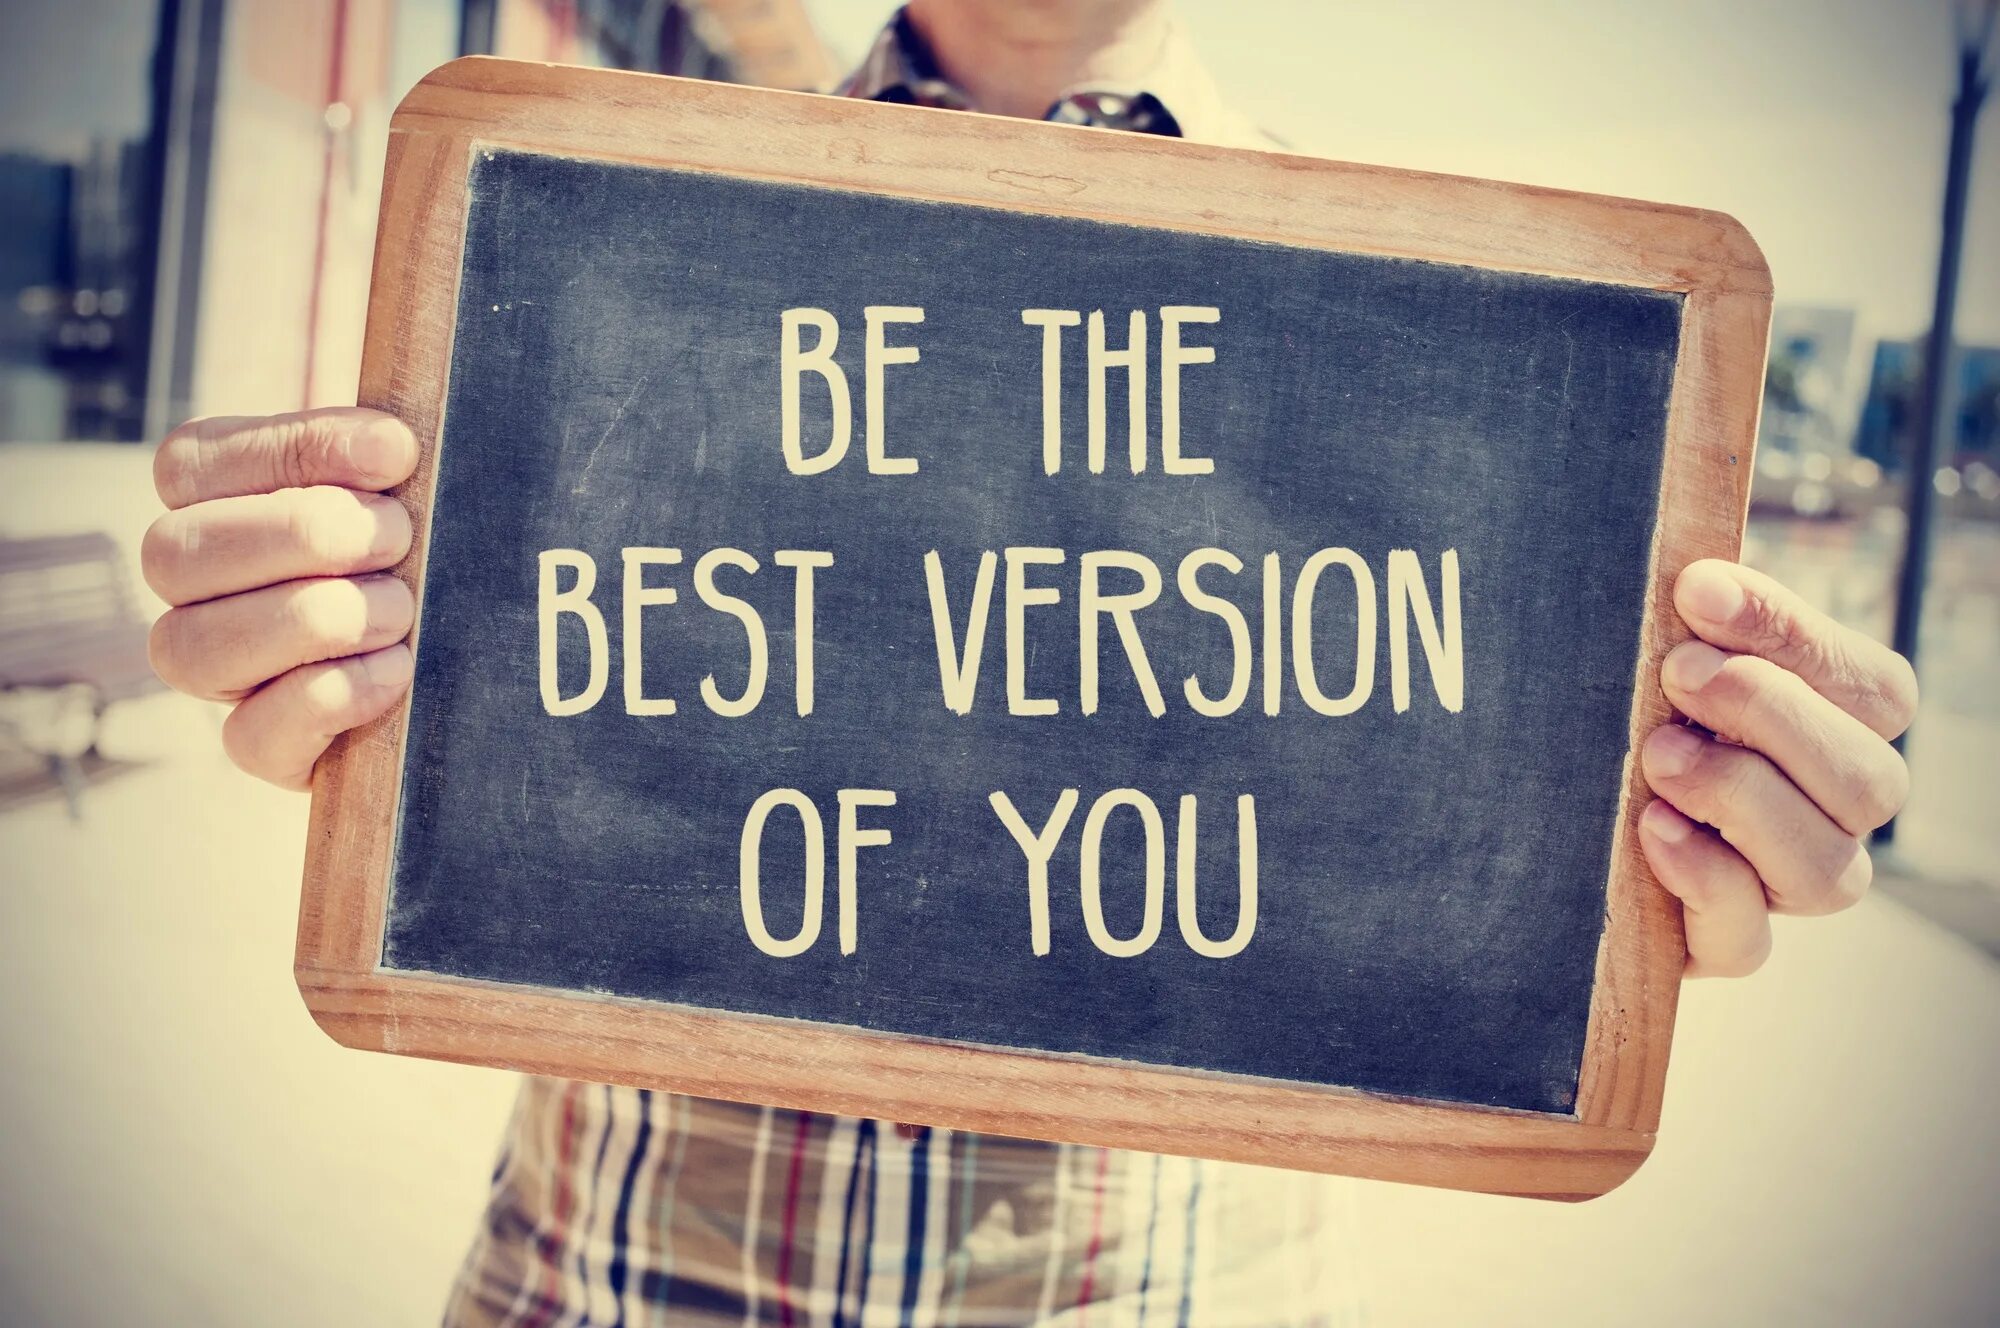 Are you happy in your life. Be you!. Be the best Version of yourself обои. Мотивационные картинки. Стань лучшей версией себя на английском.